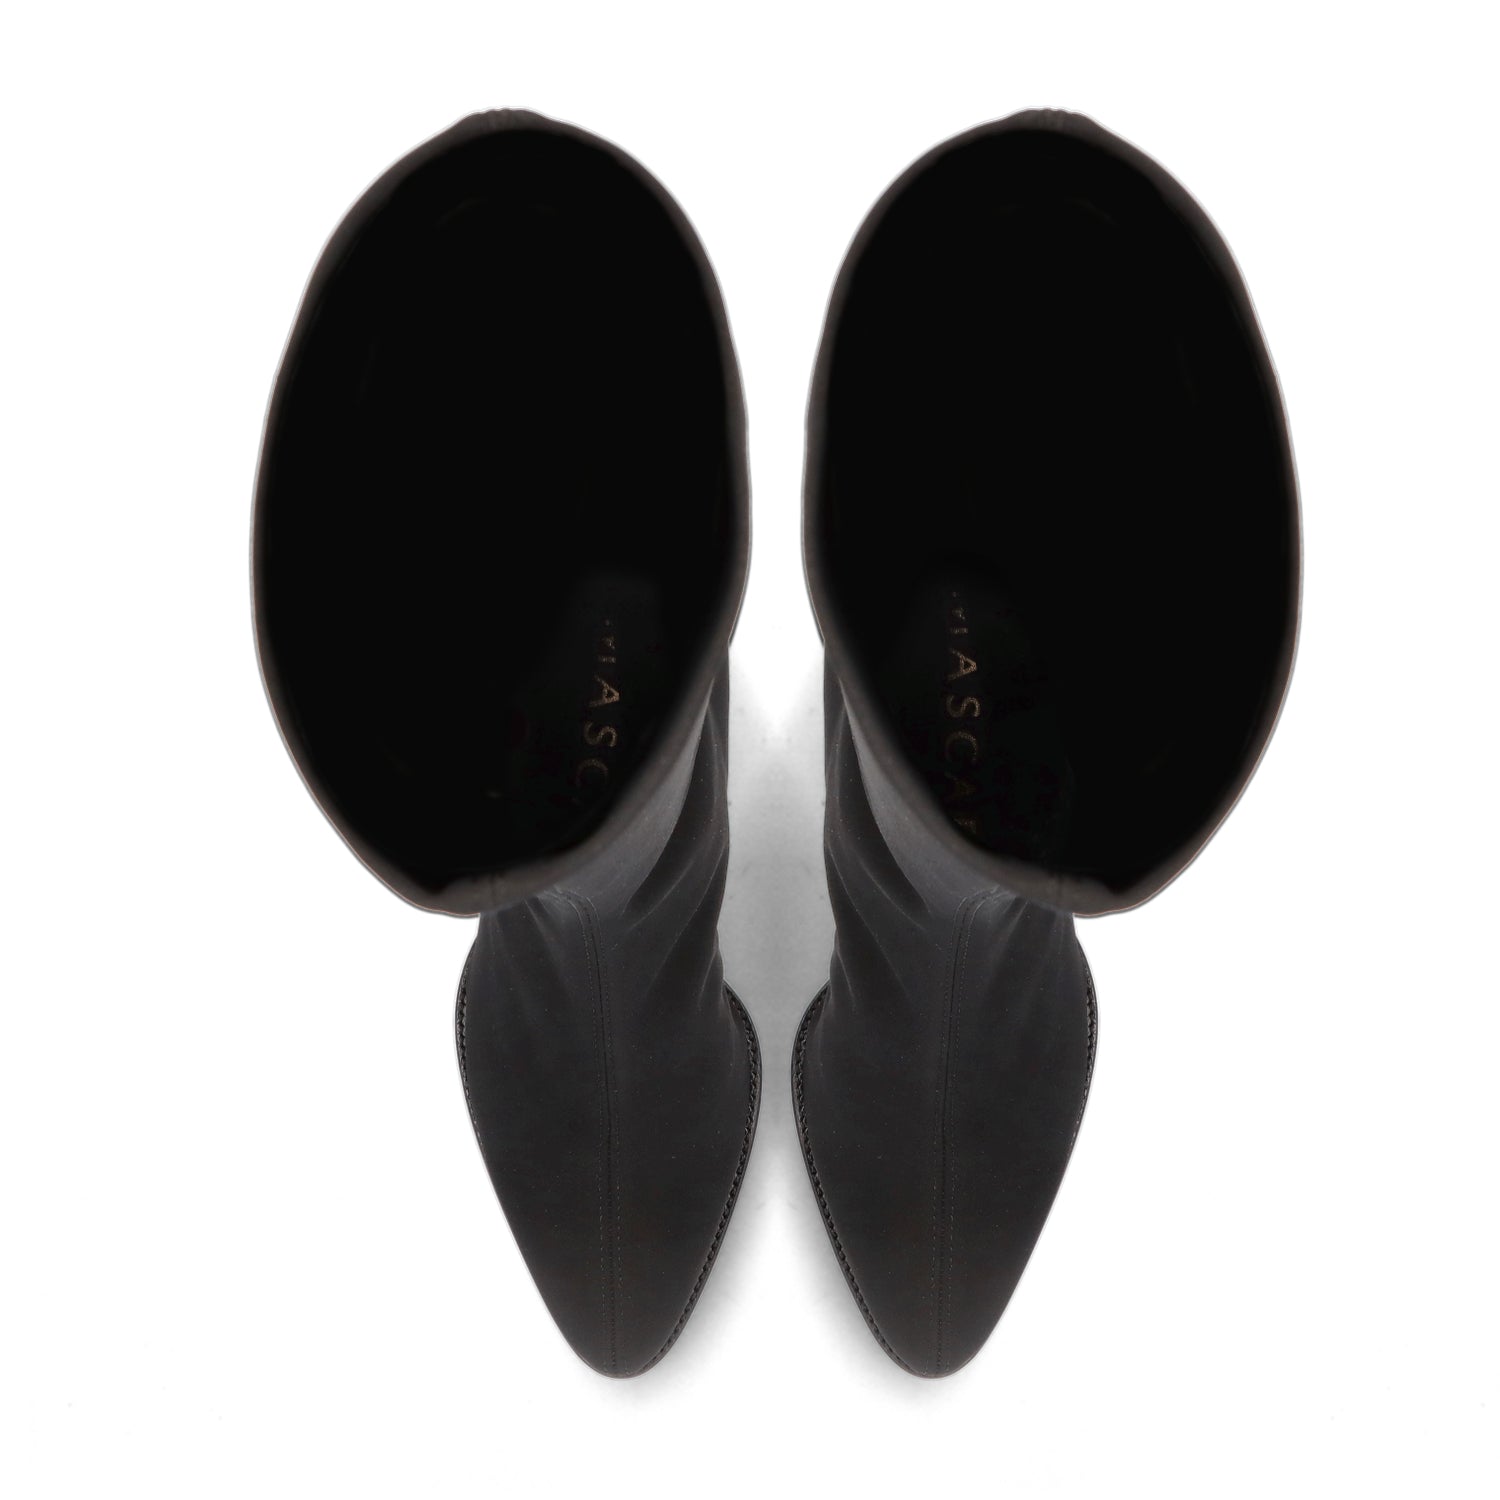 Botas De La Marca Mascaro Para Mujer Modelo Bota Lima Elastic Boot Negra En Color Negro